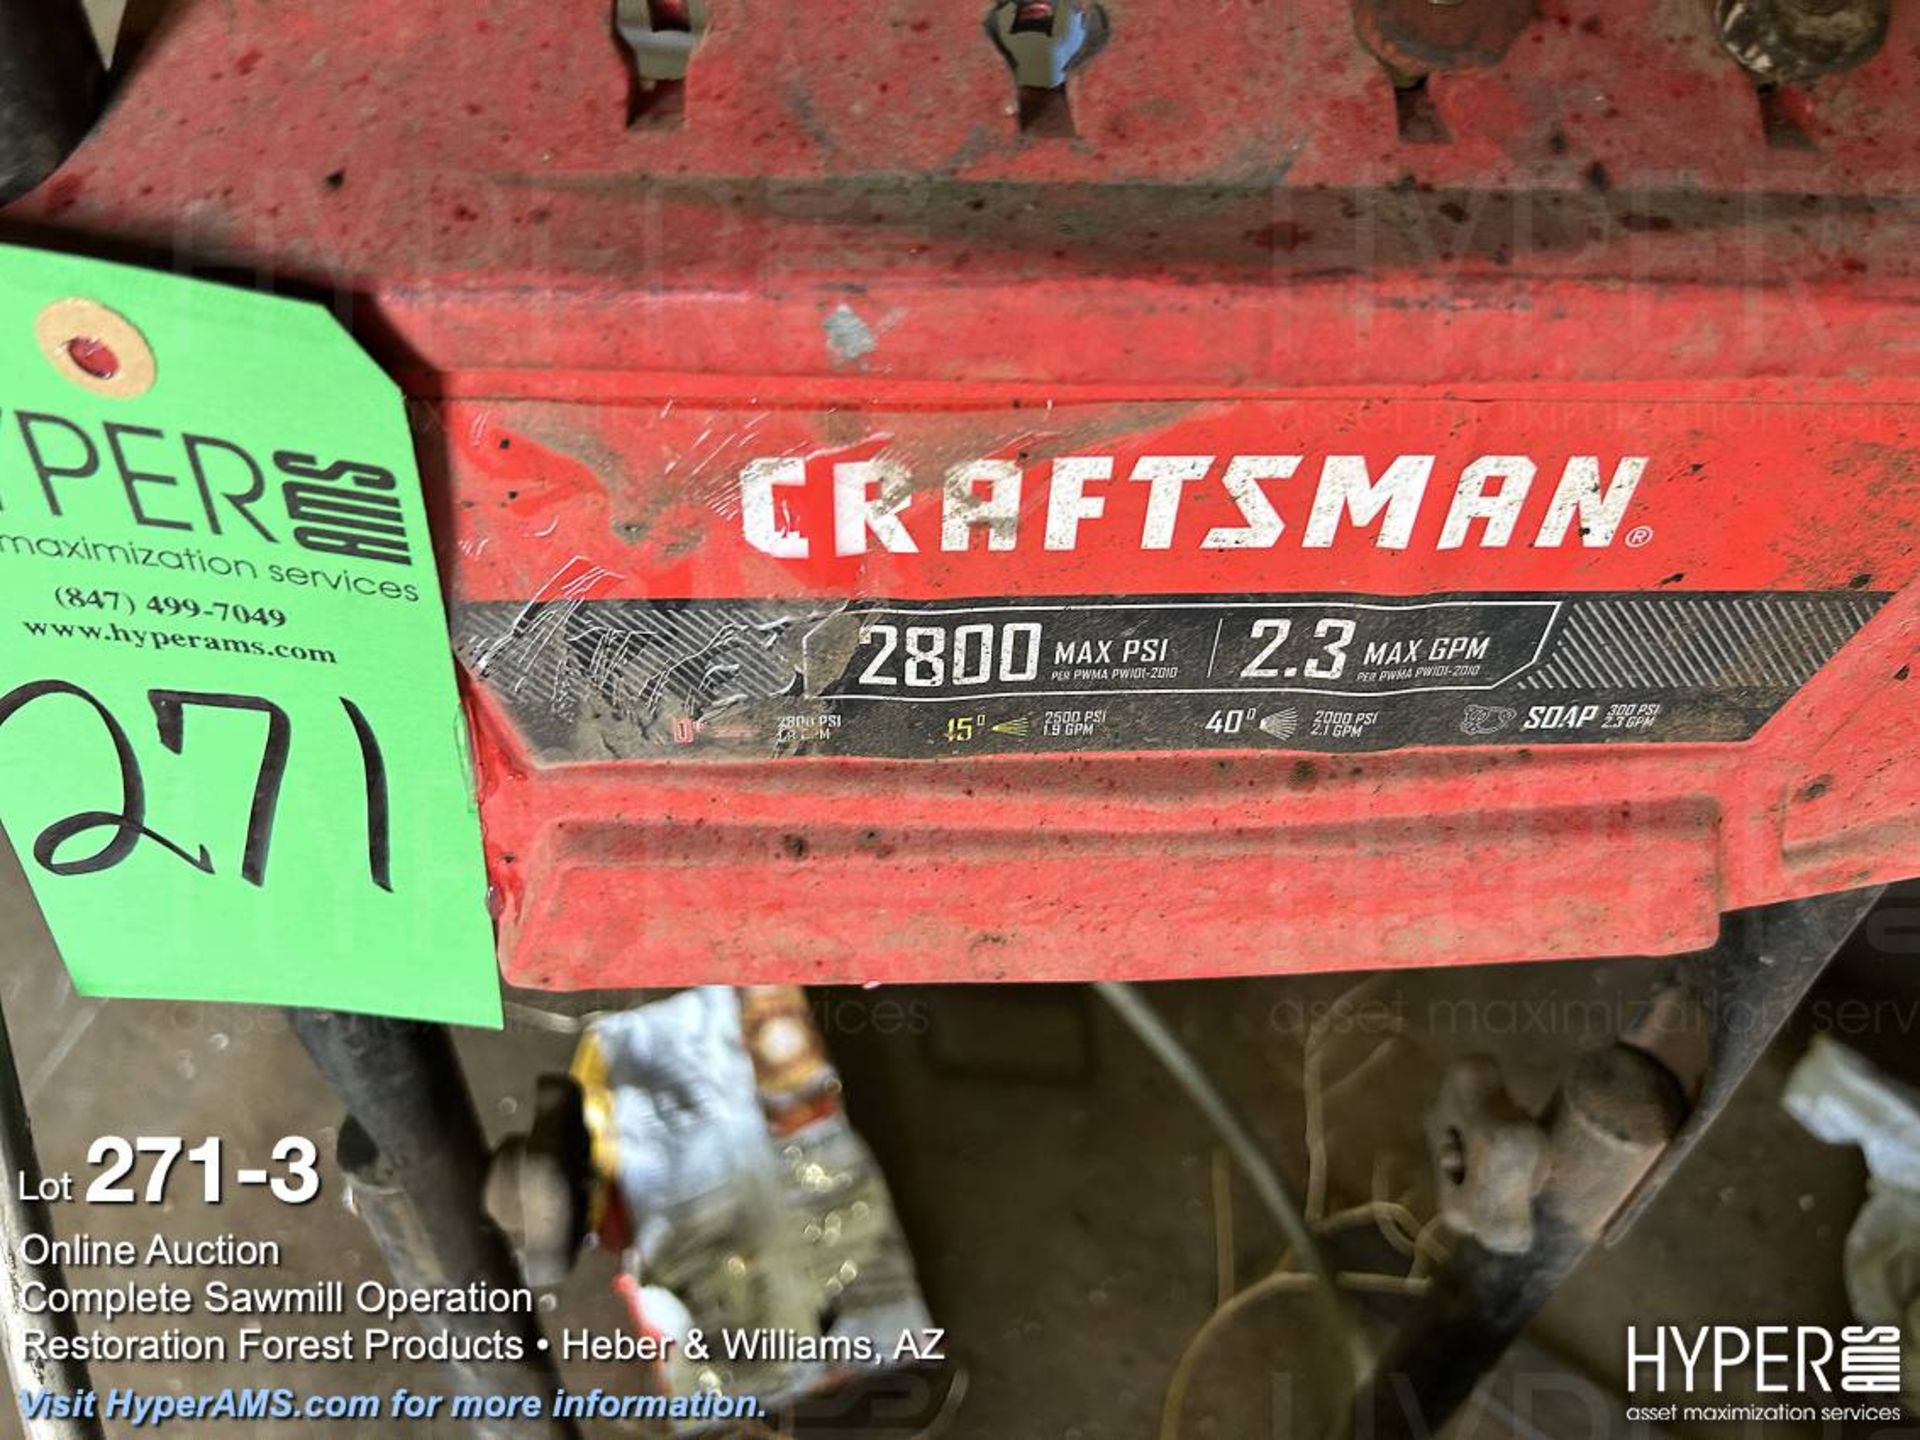 Craftsman 163cc presser washer - Image 3 of 3